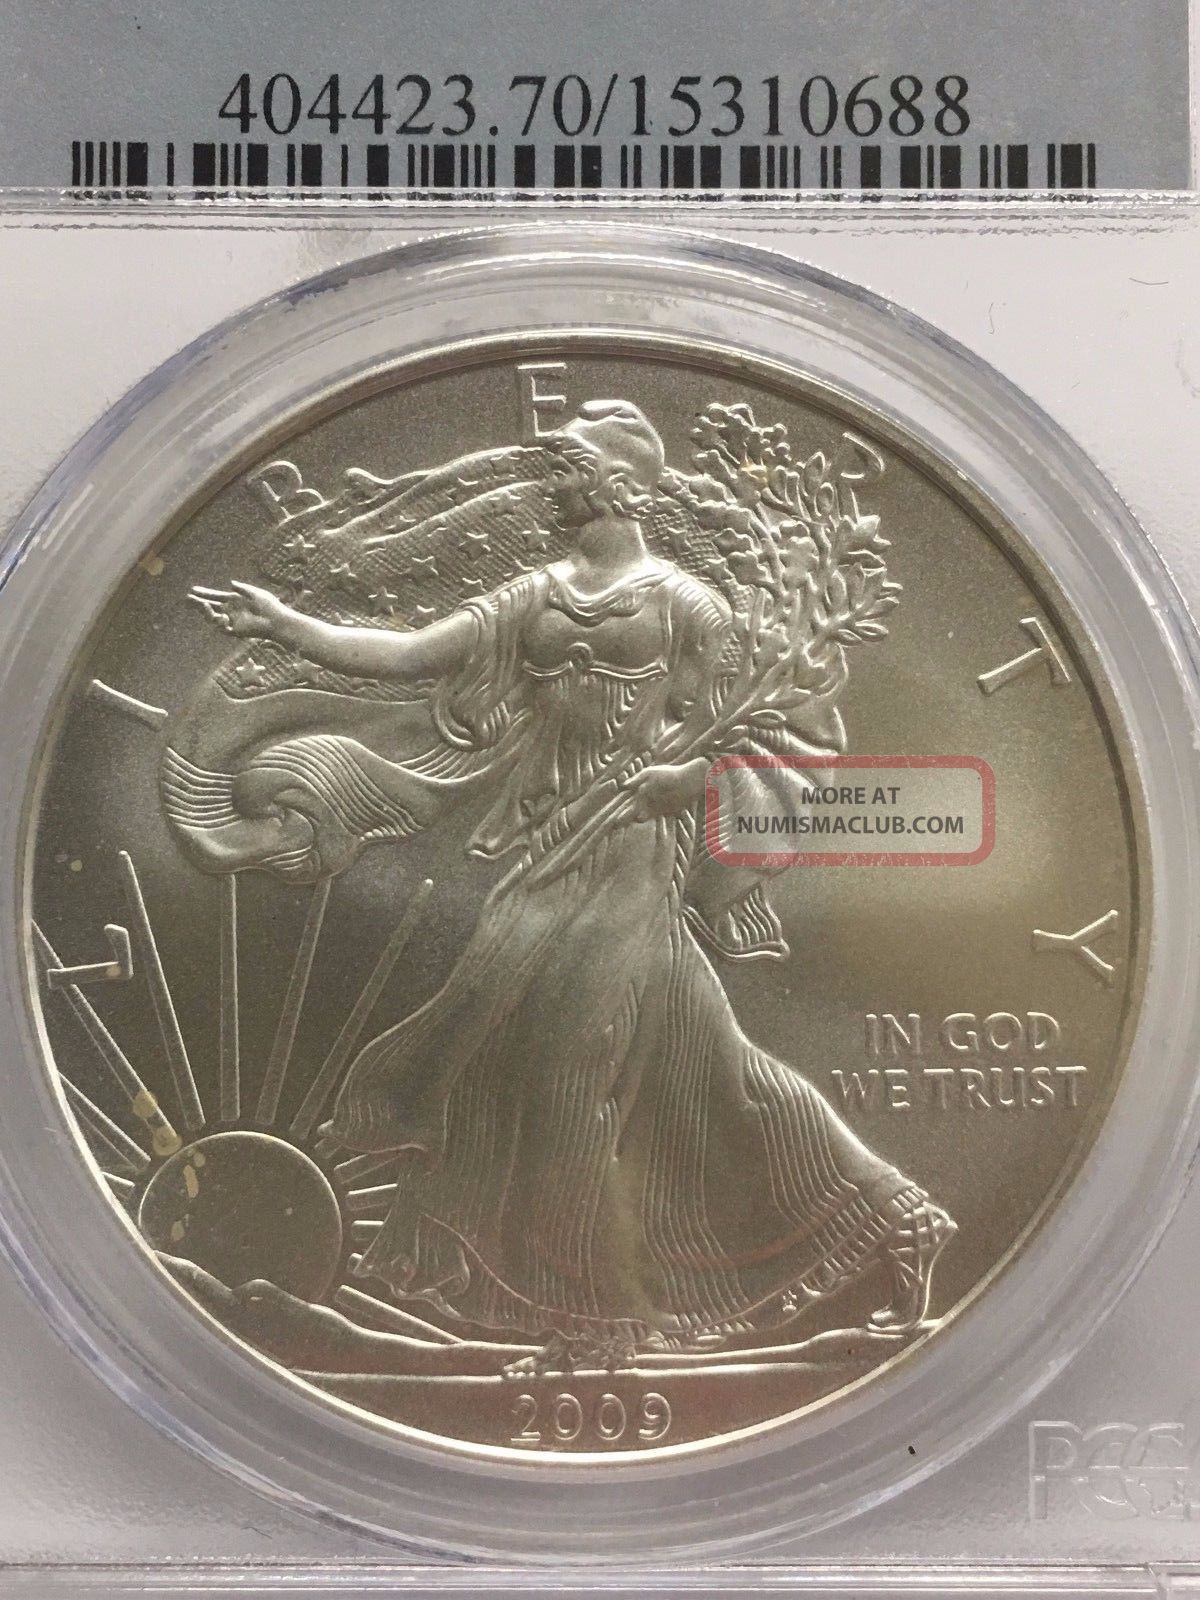 2009 Pcgs Ms 70 Silver American Eagle Dollar $1 Coin Silver photo